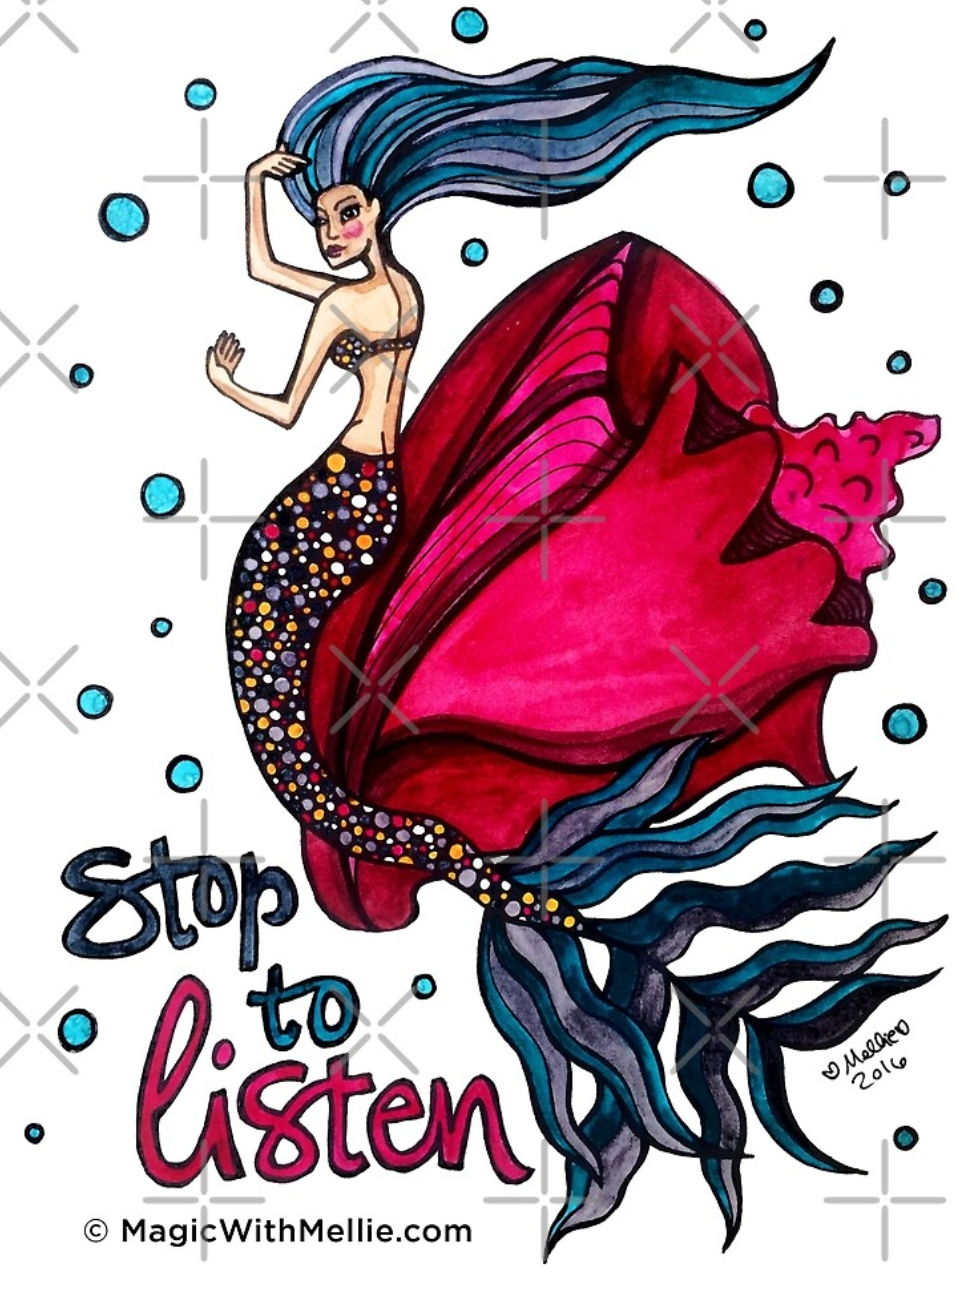 Animals of Inspiration: Stop to Listen: Mermaid Mantra Illustration